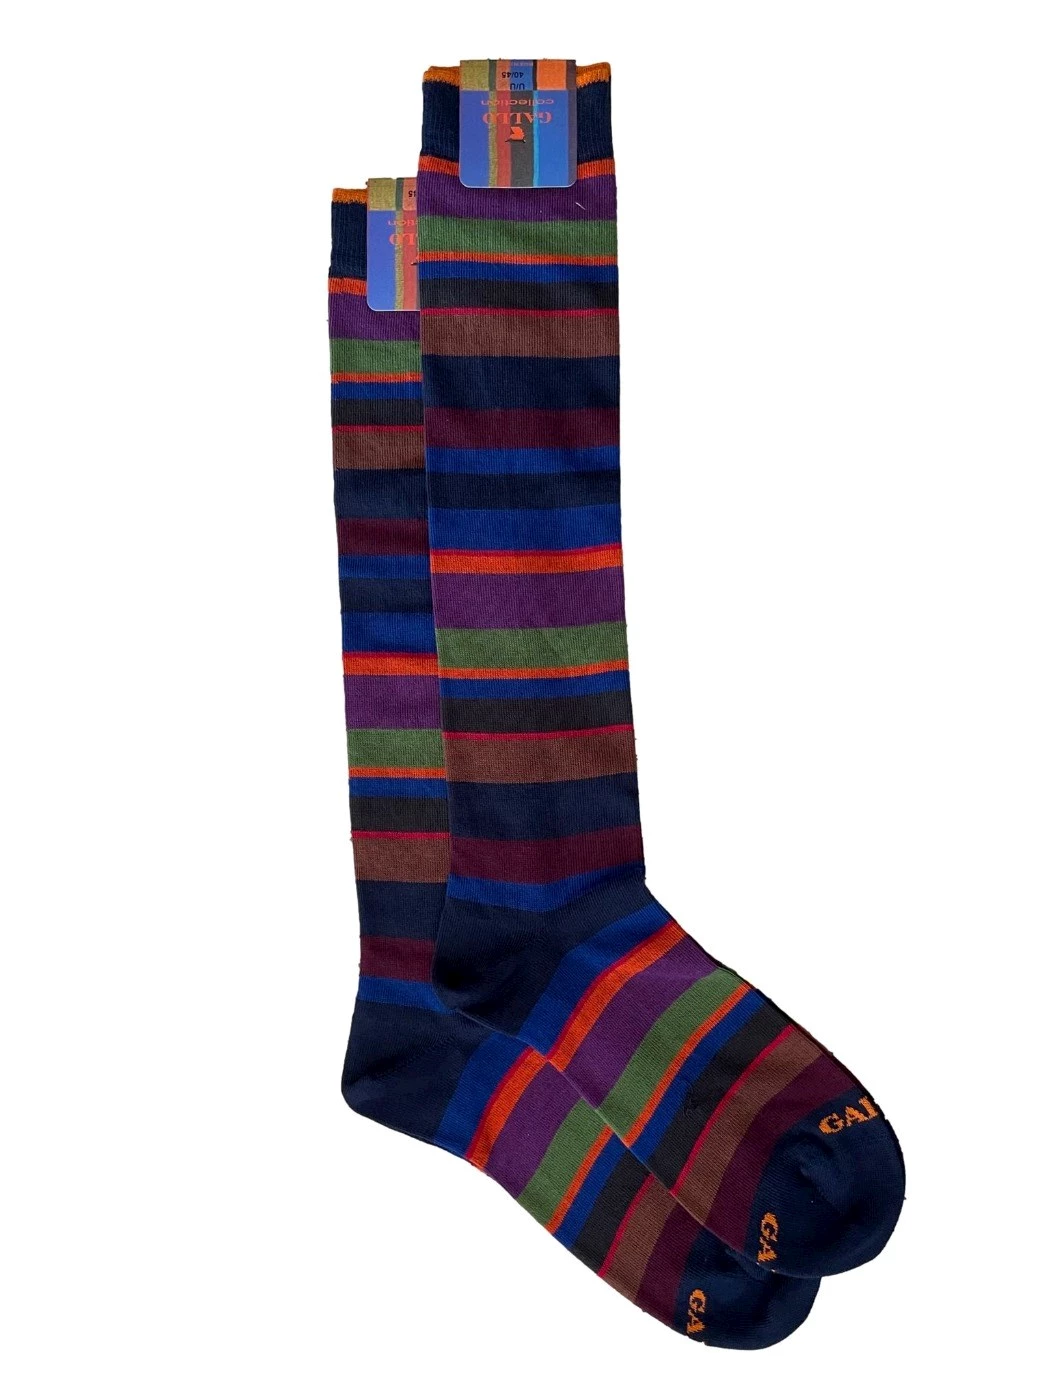 Men's long socks cotton mocha multicolor stripes Rooster